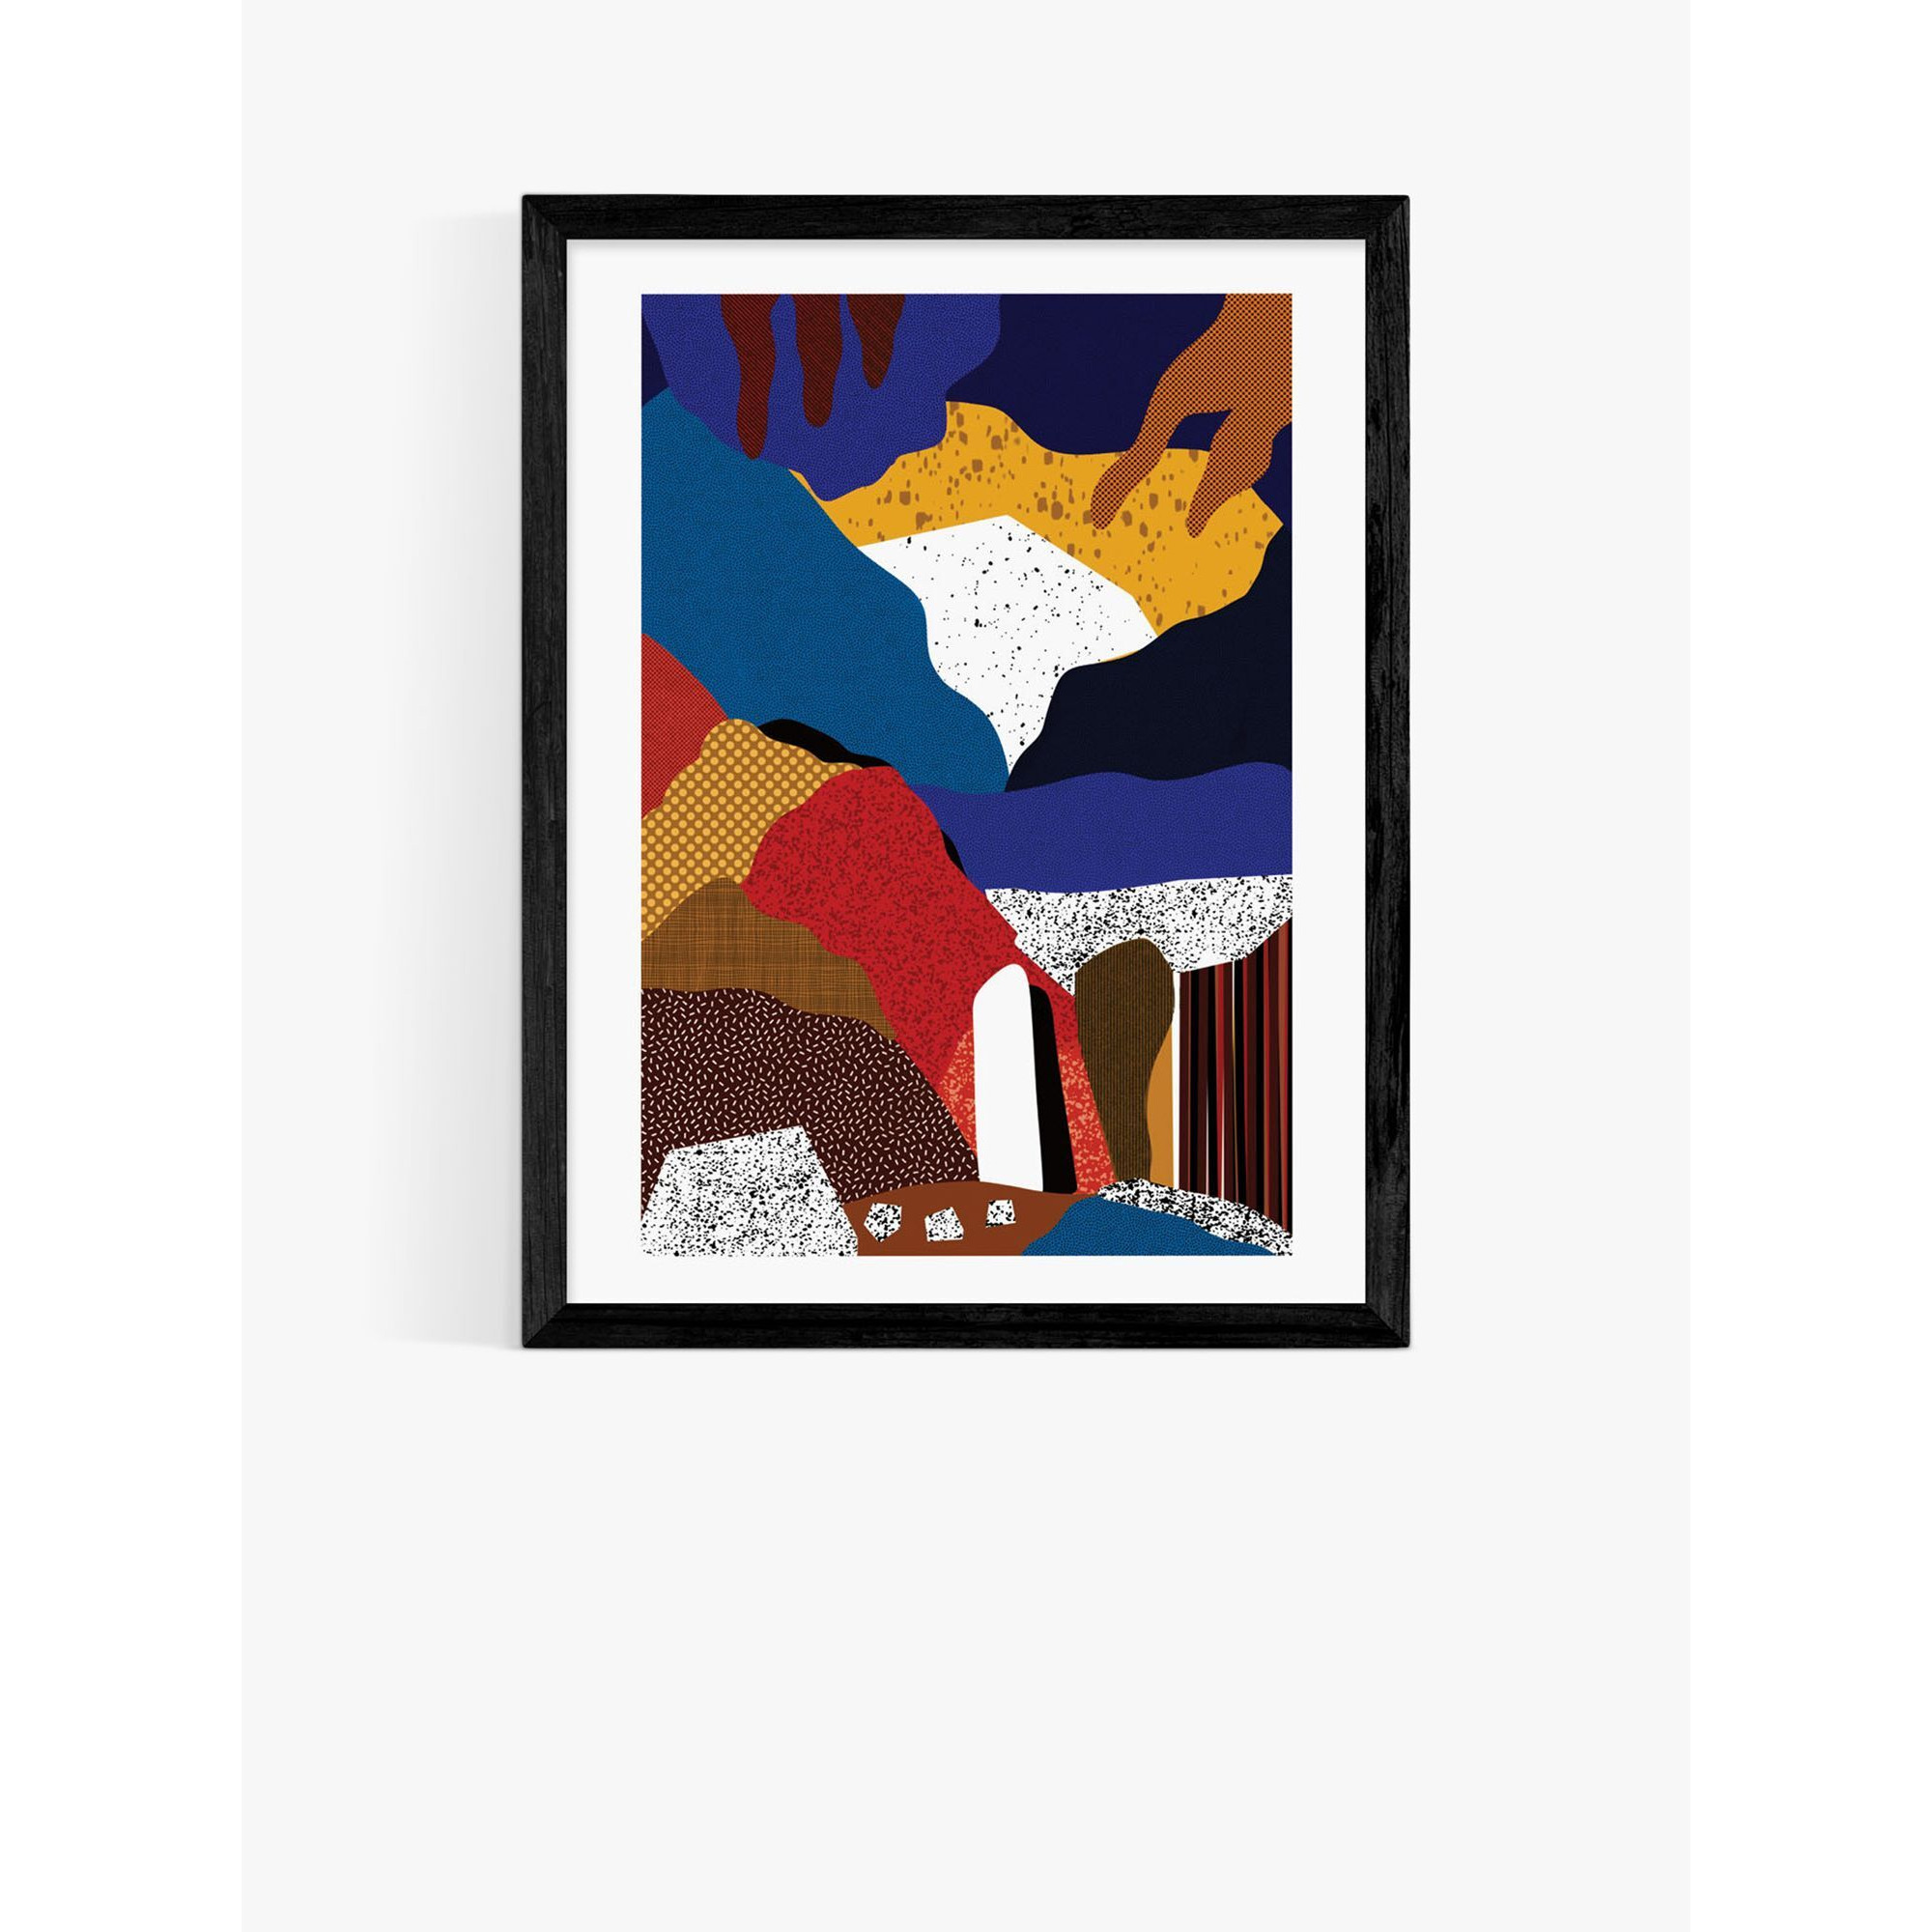 EAST END PRINTS Sumuyya Khader 'Abstract I' Framed Print - image 1